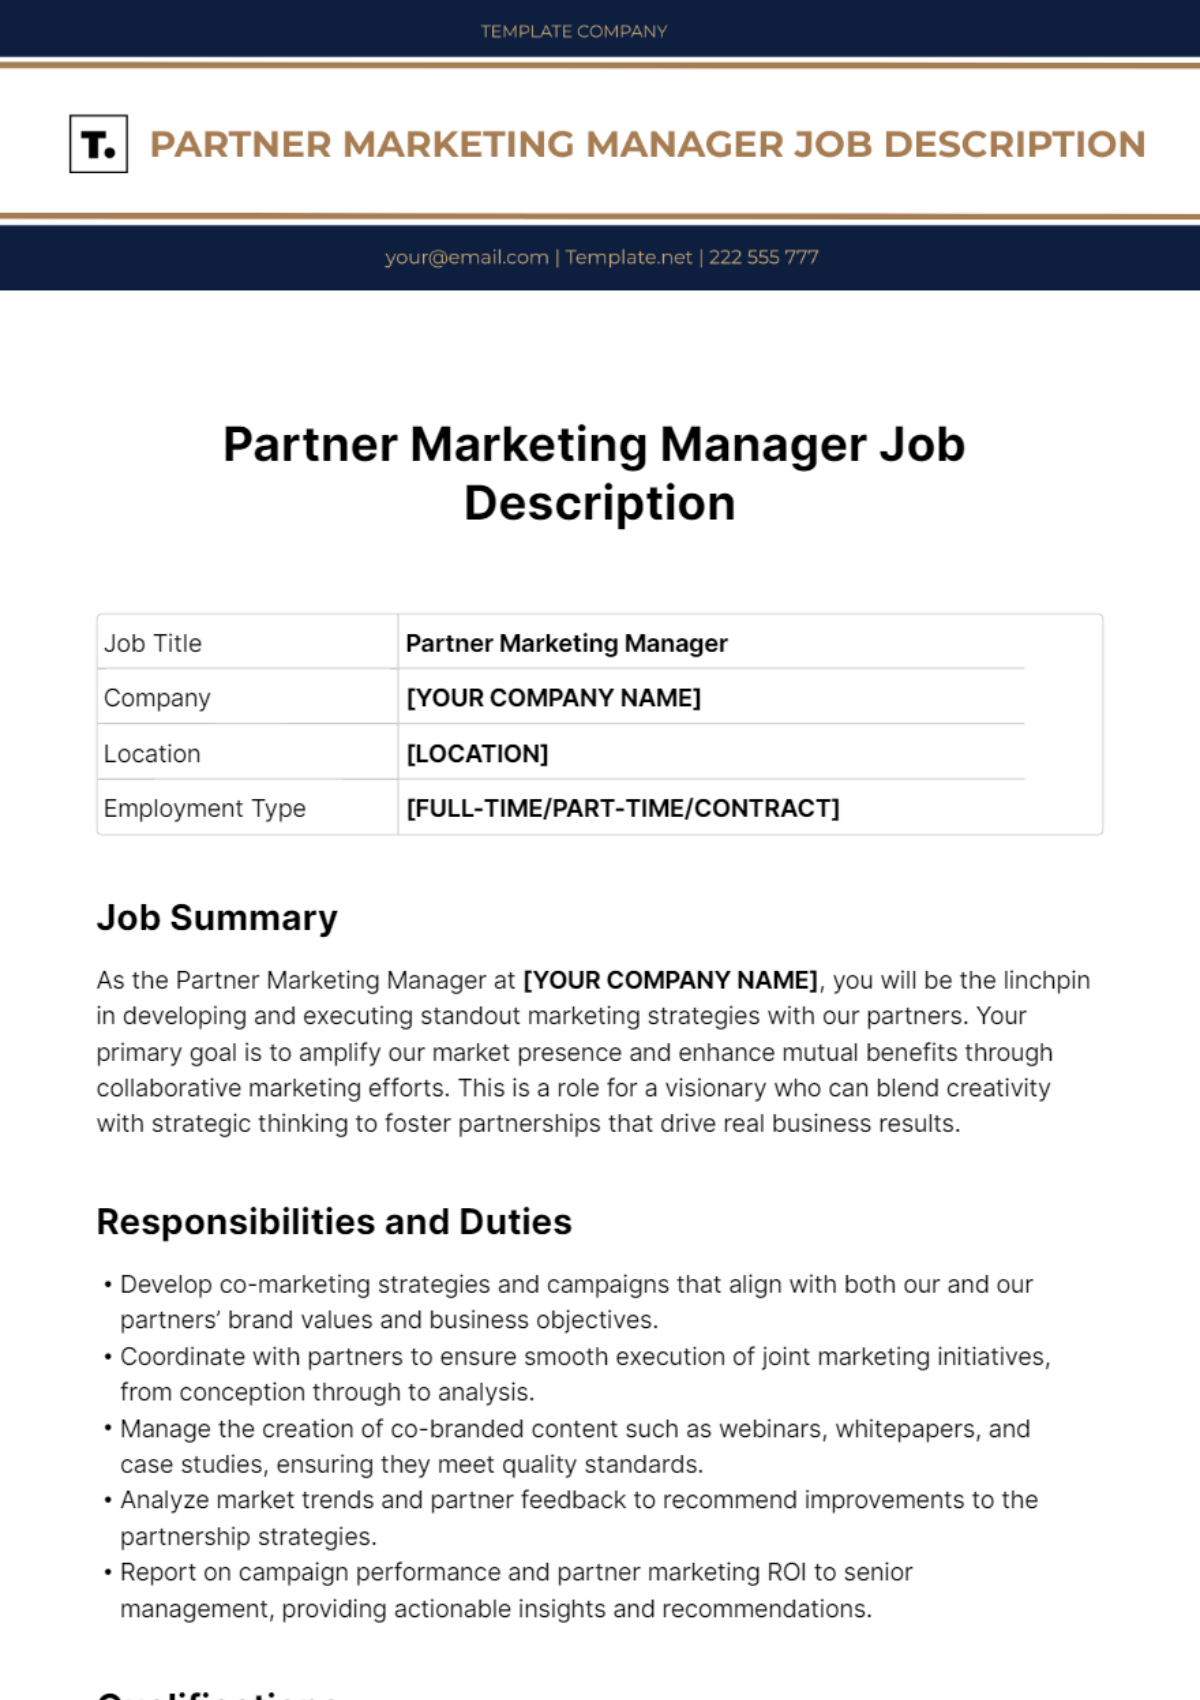 Free Partner Marketing Manager Job Description Template